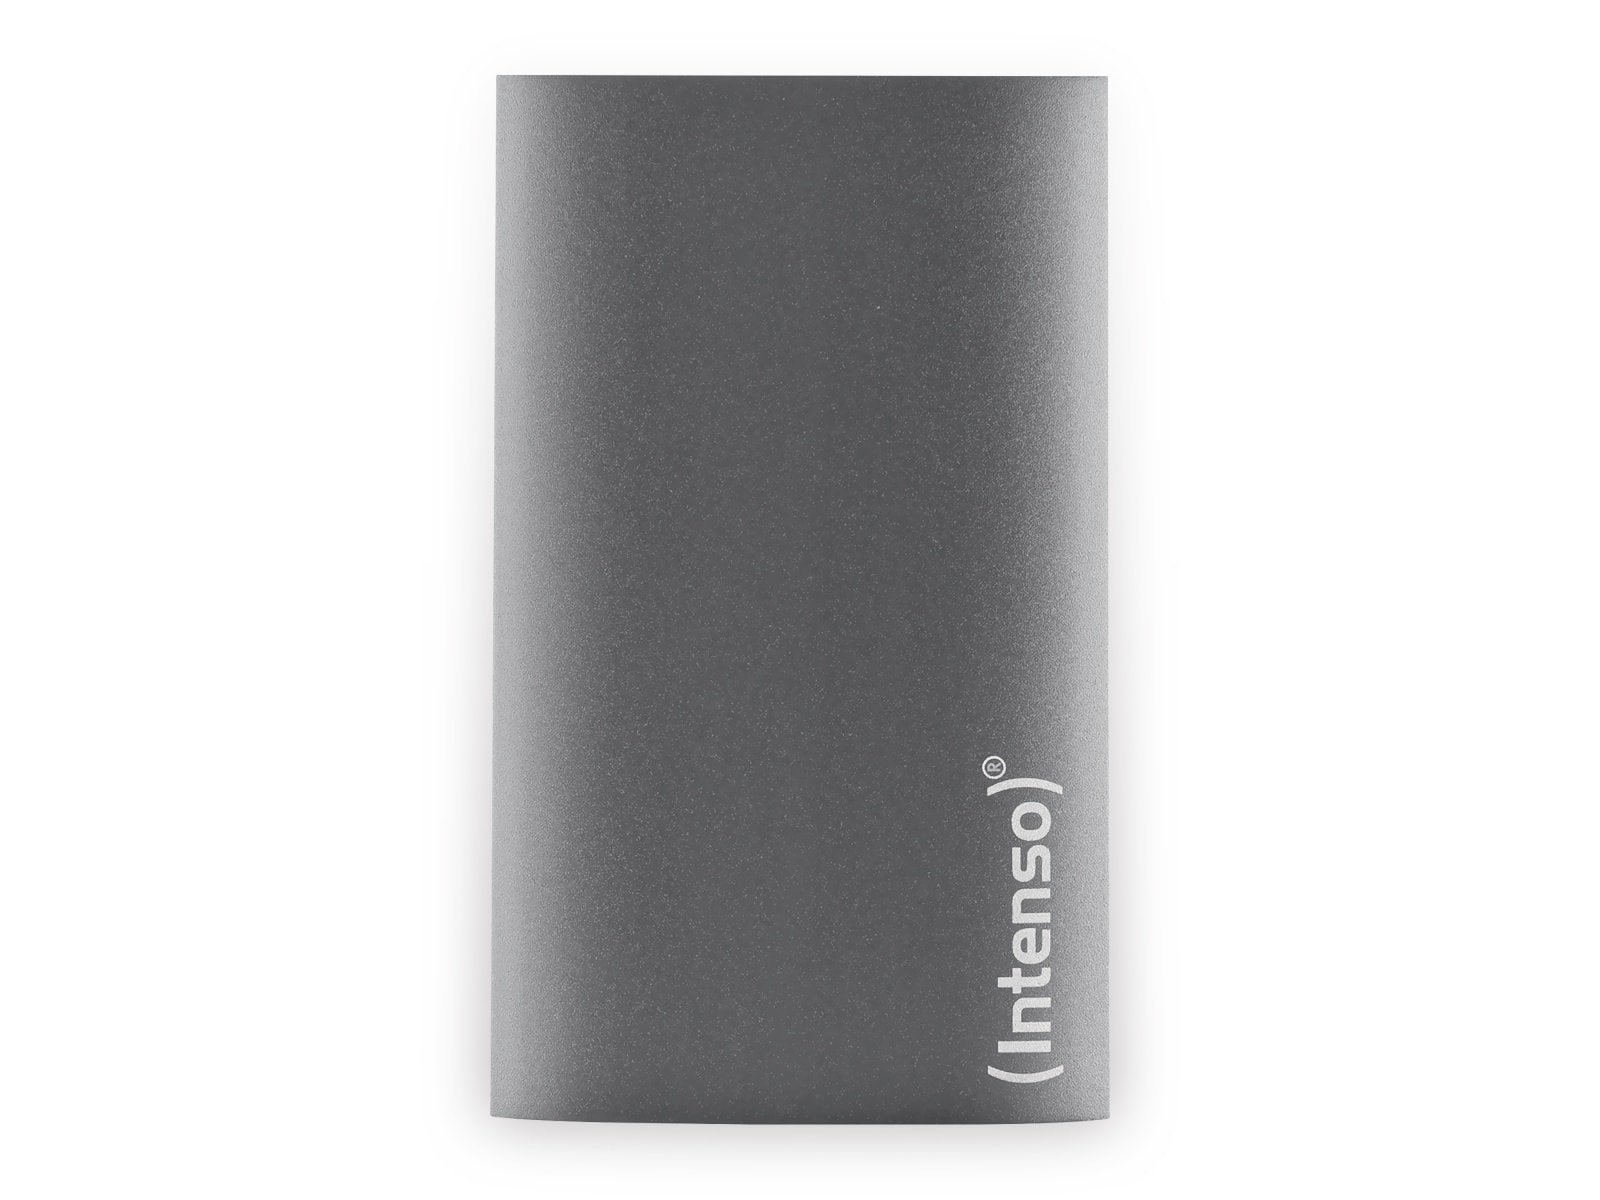 INTENSO USB 3.0-SSD Portable Premium Edition, 1 TB